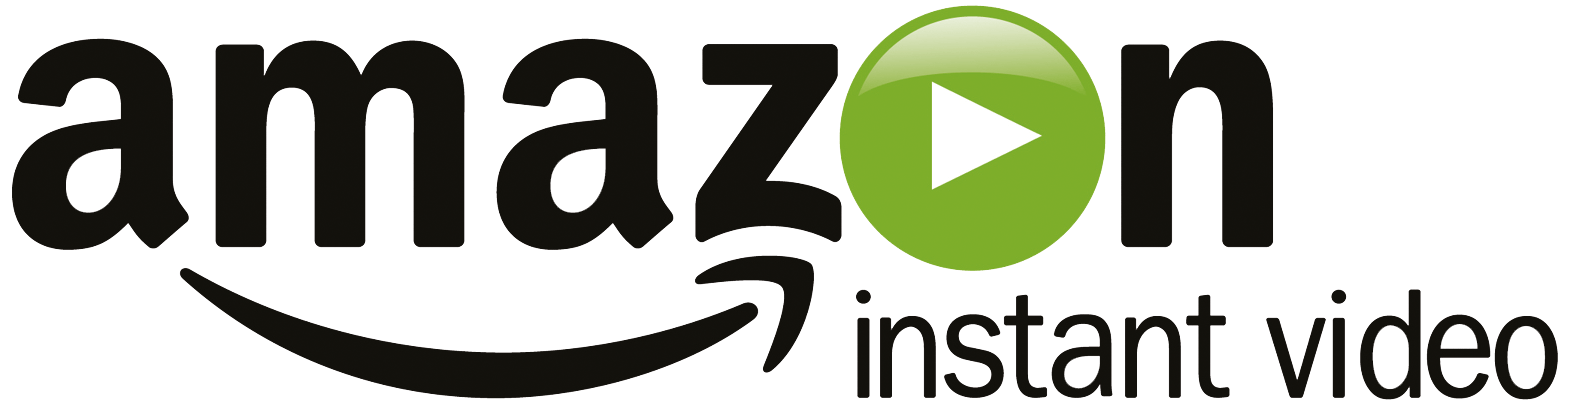 Amazon Video Logo - Amazon Instant Video.png